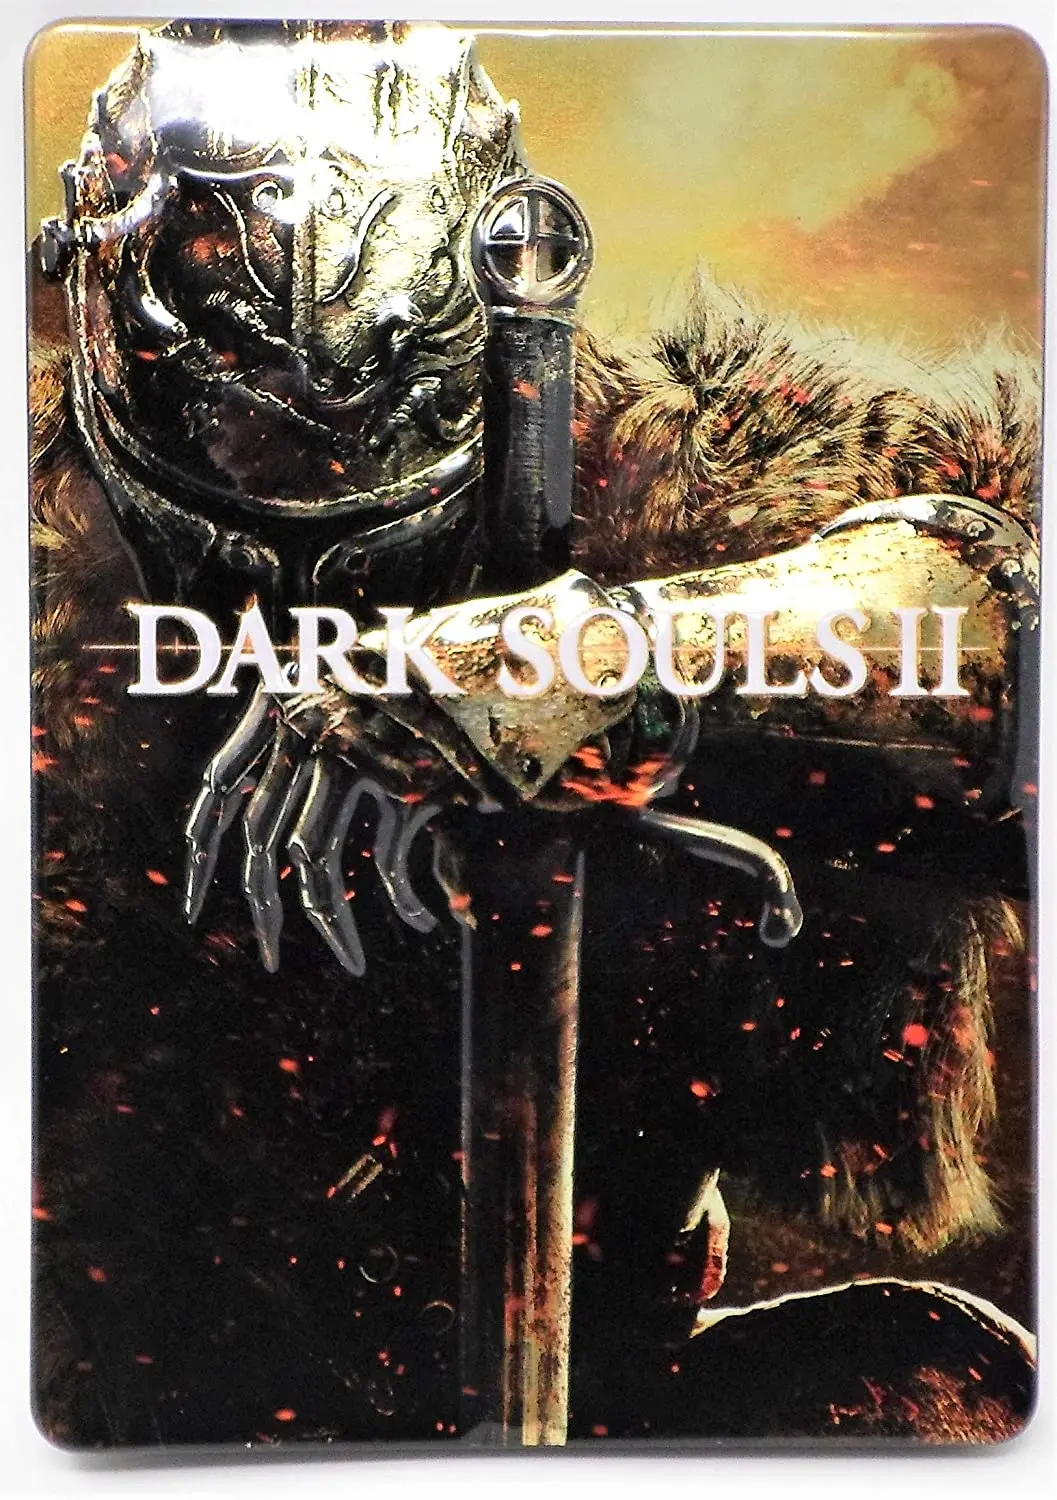 Dark Souls 2 - The Black Armor Edition (EU) (PC) - Steam - Digital Code